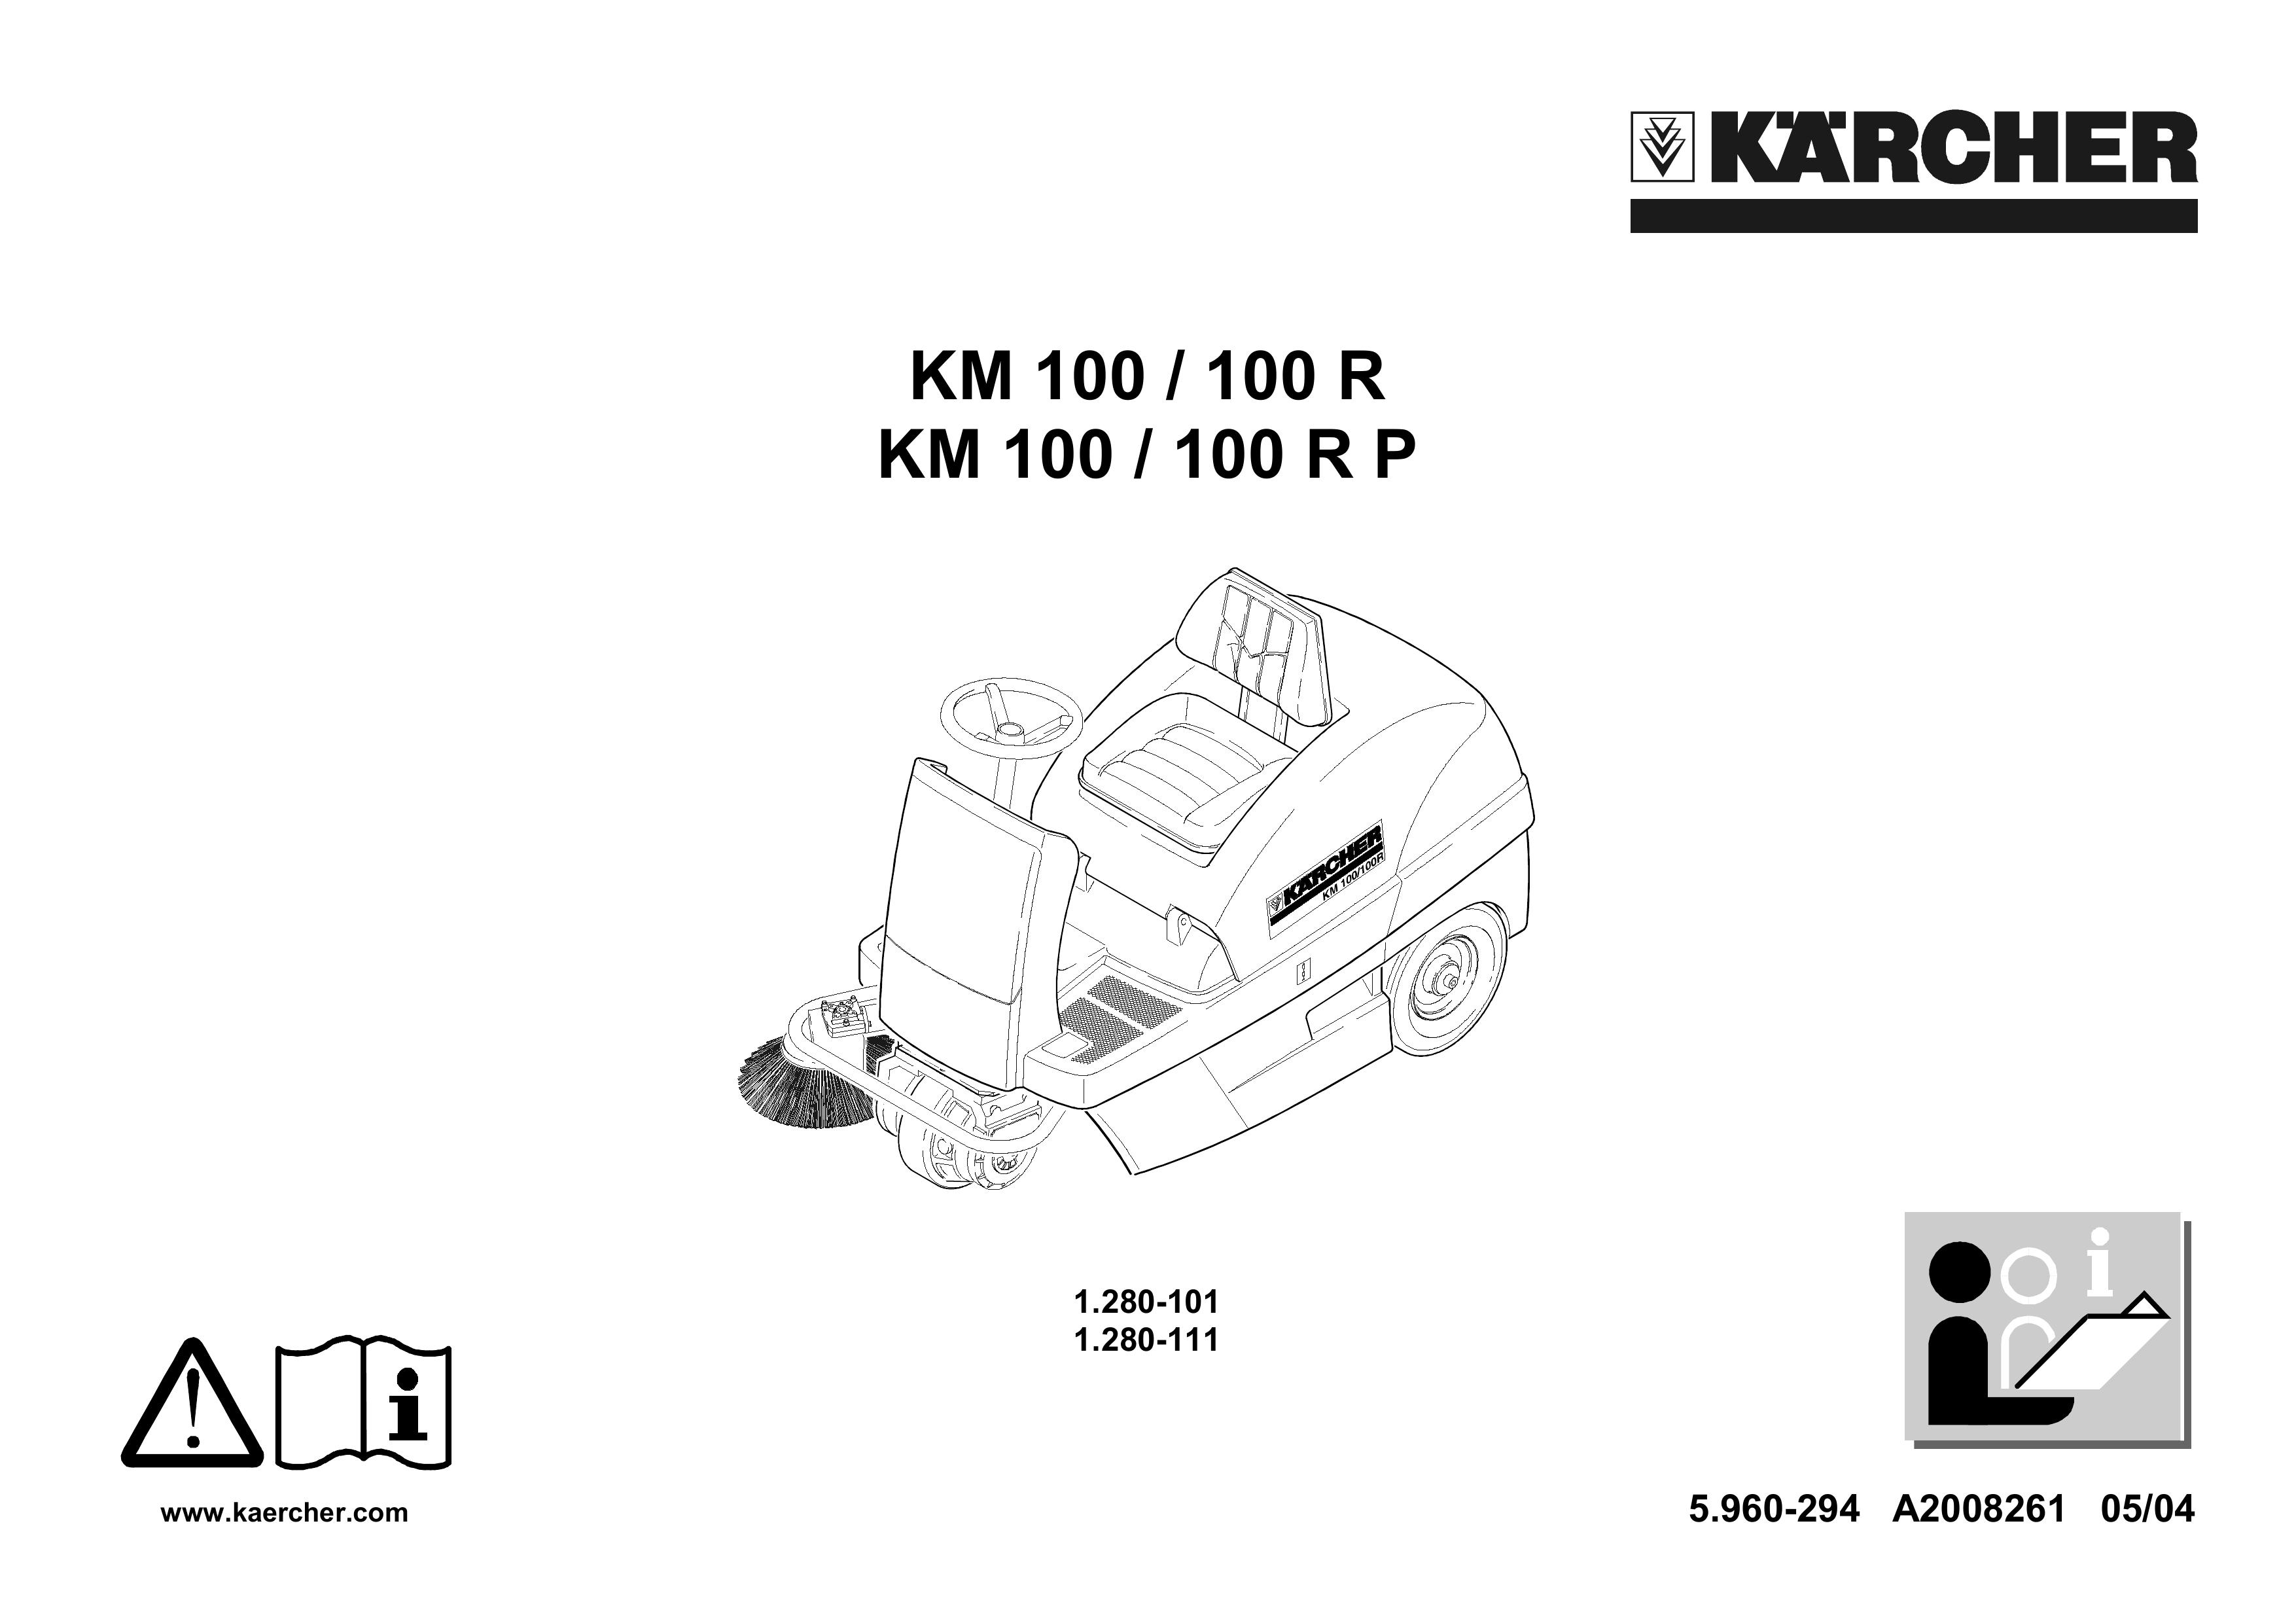 Karcher KM 100 / 100 R P Lawn Sweeper User Manual